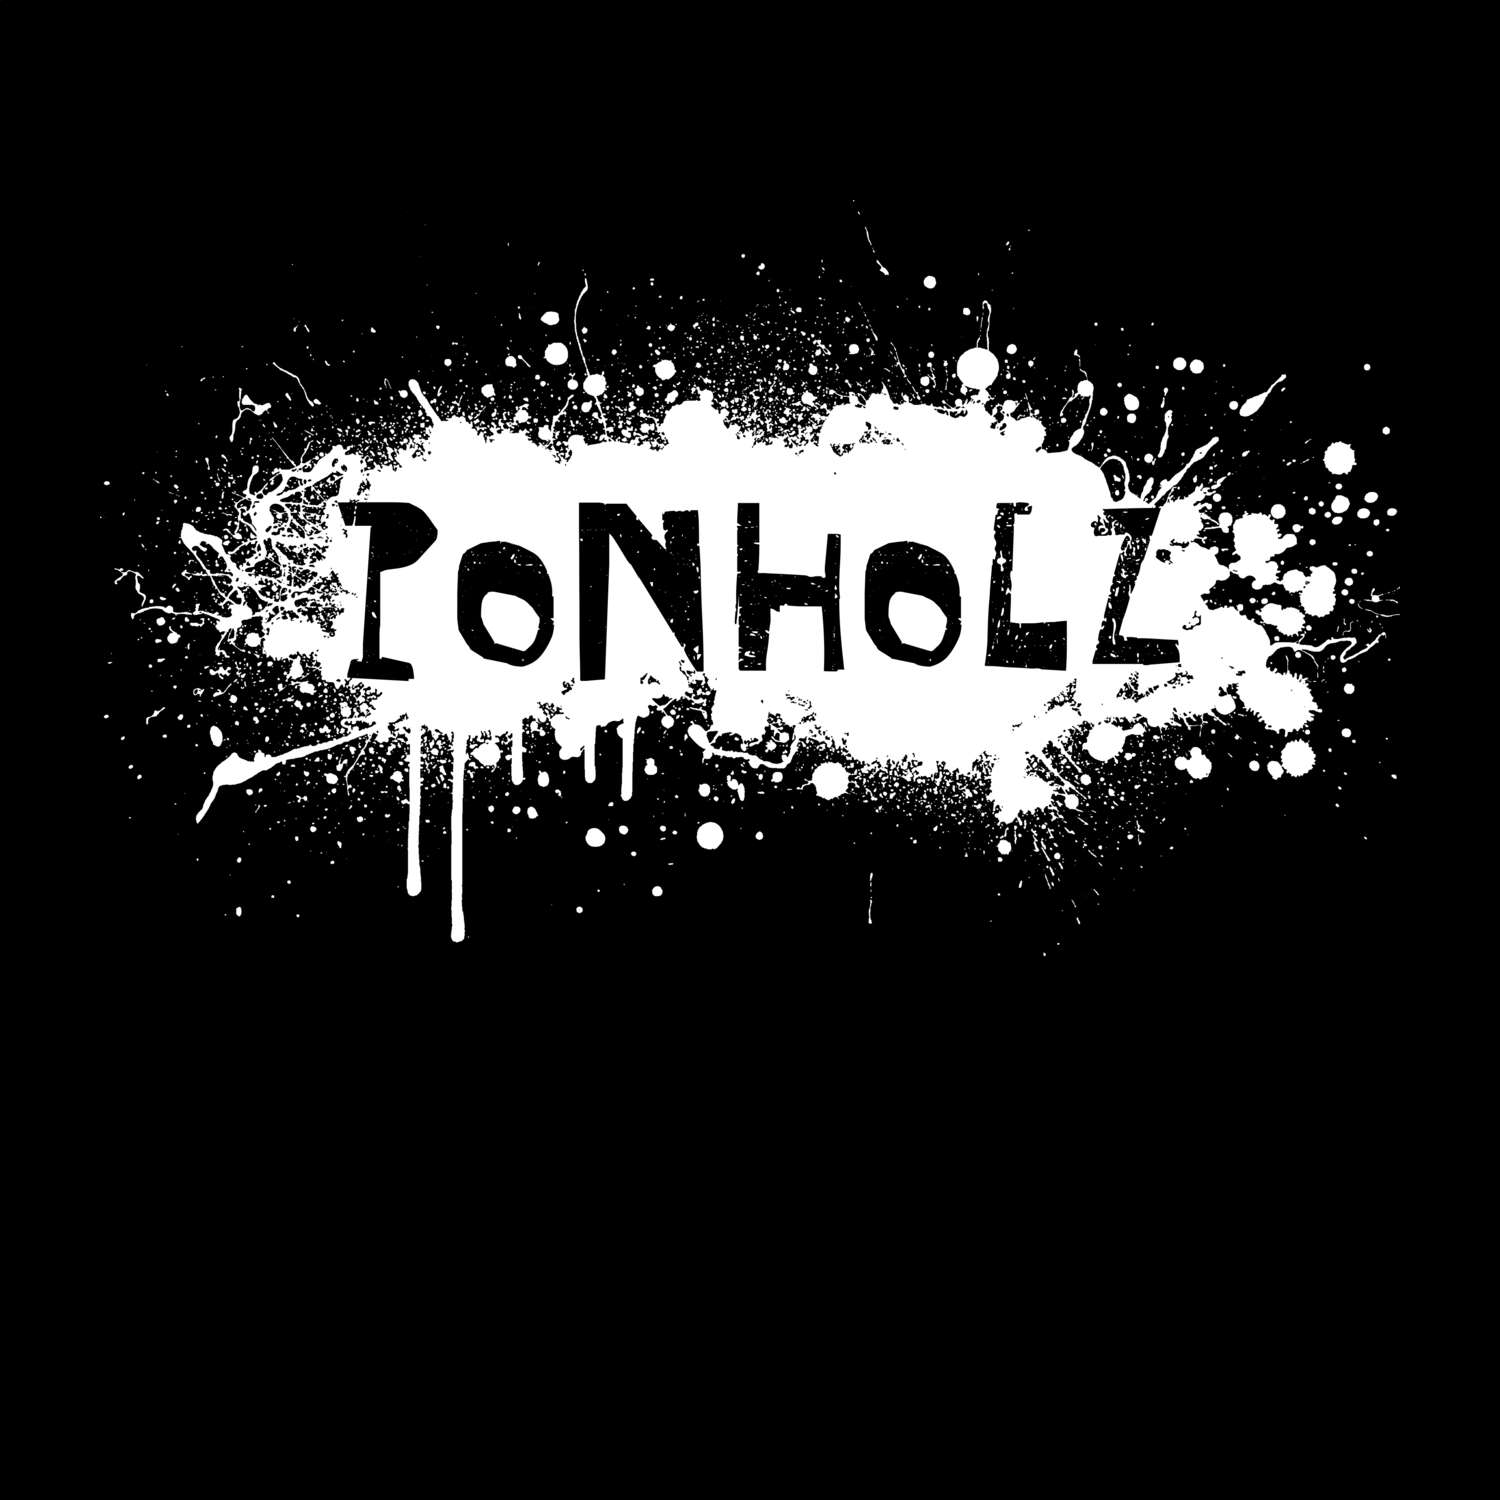 Ponholz T-Shirt »Paint Splash Punk«